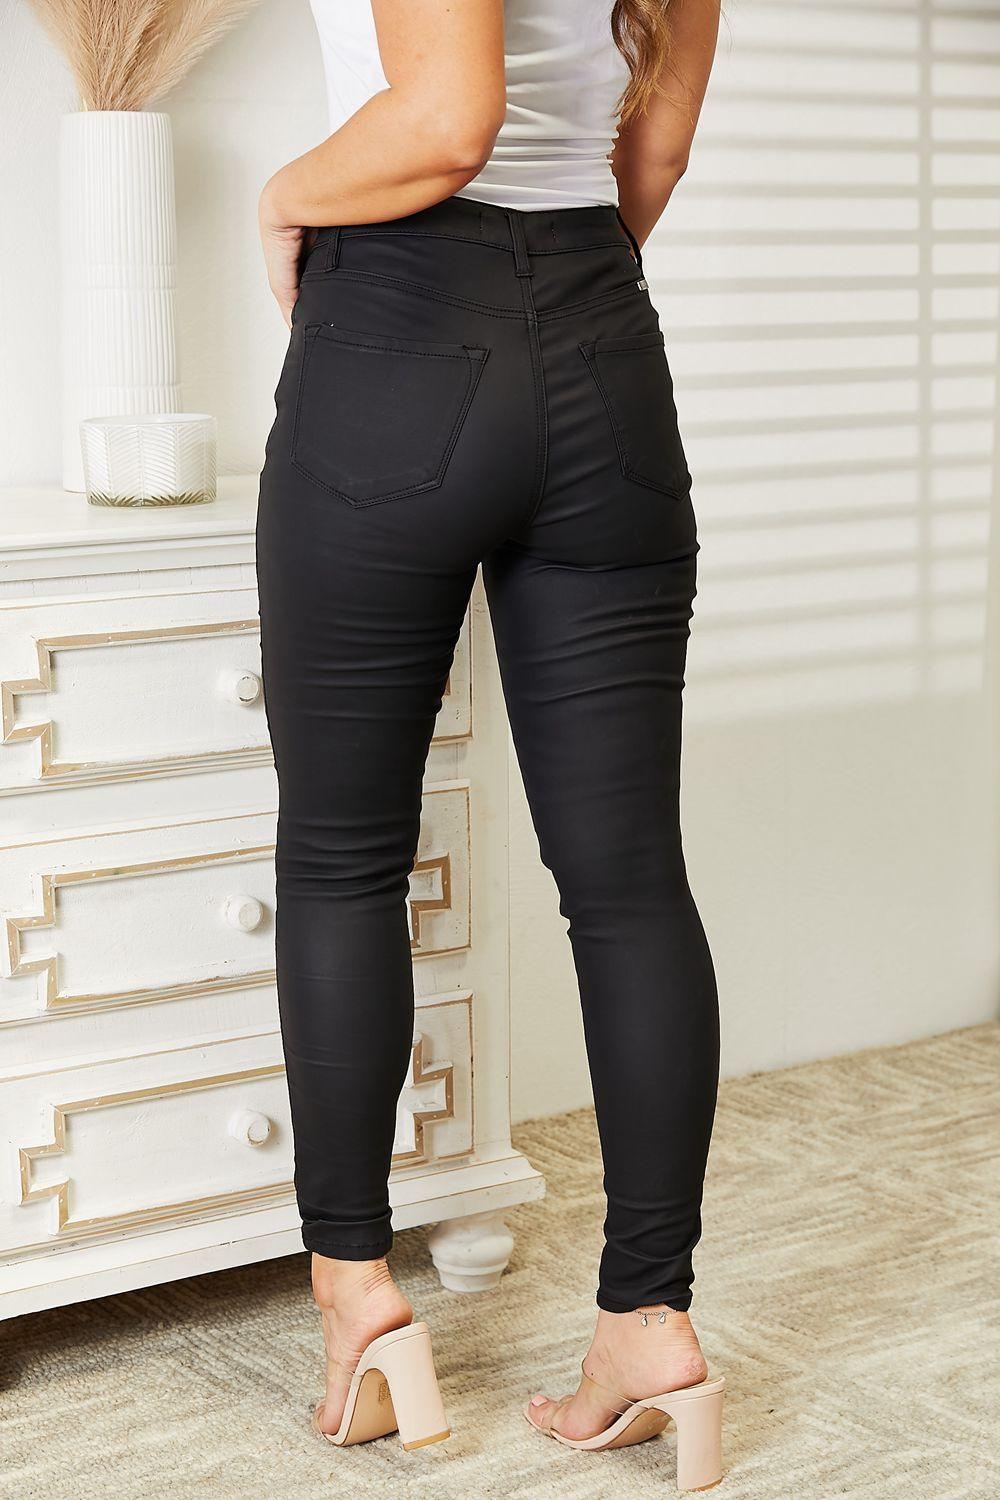 Kancan Black Pants - Skinny - Ankle Length - Inspired Eye Boutique